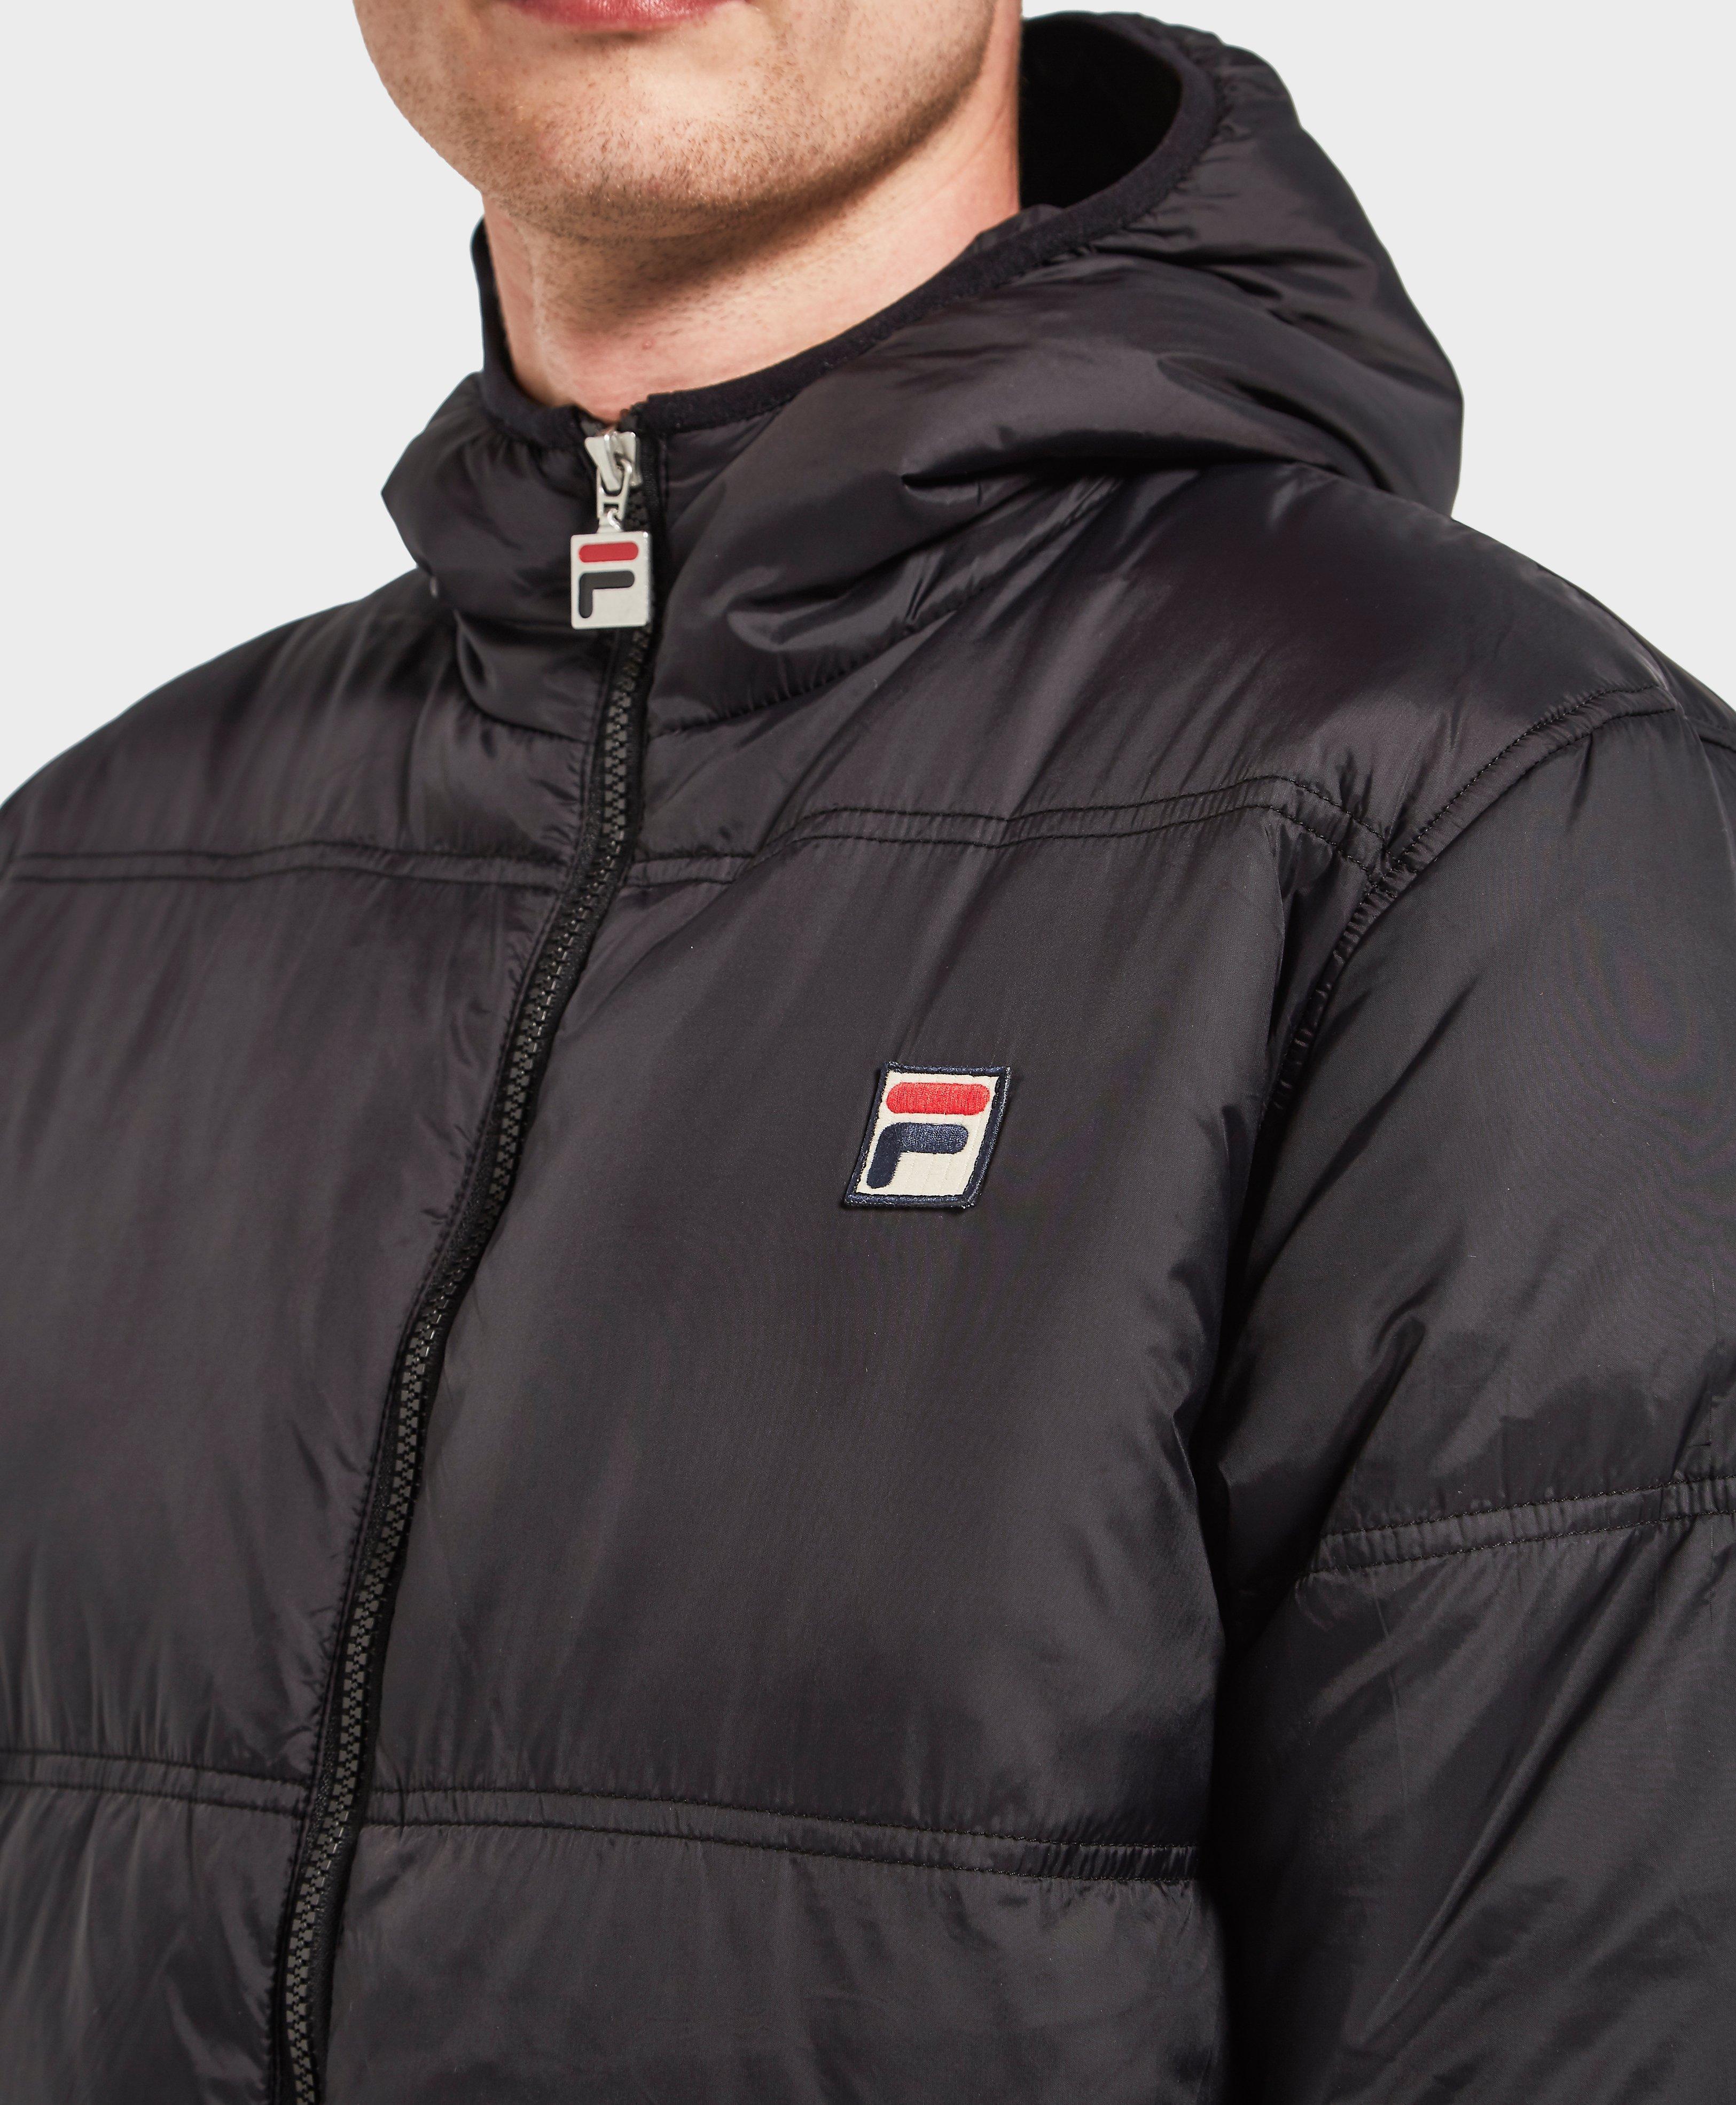 Fila Vincenzi Padded Jacket - Online Exclusive in Black for Men - Lyst